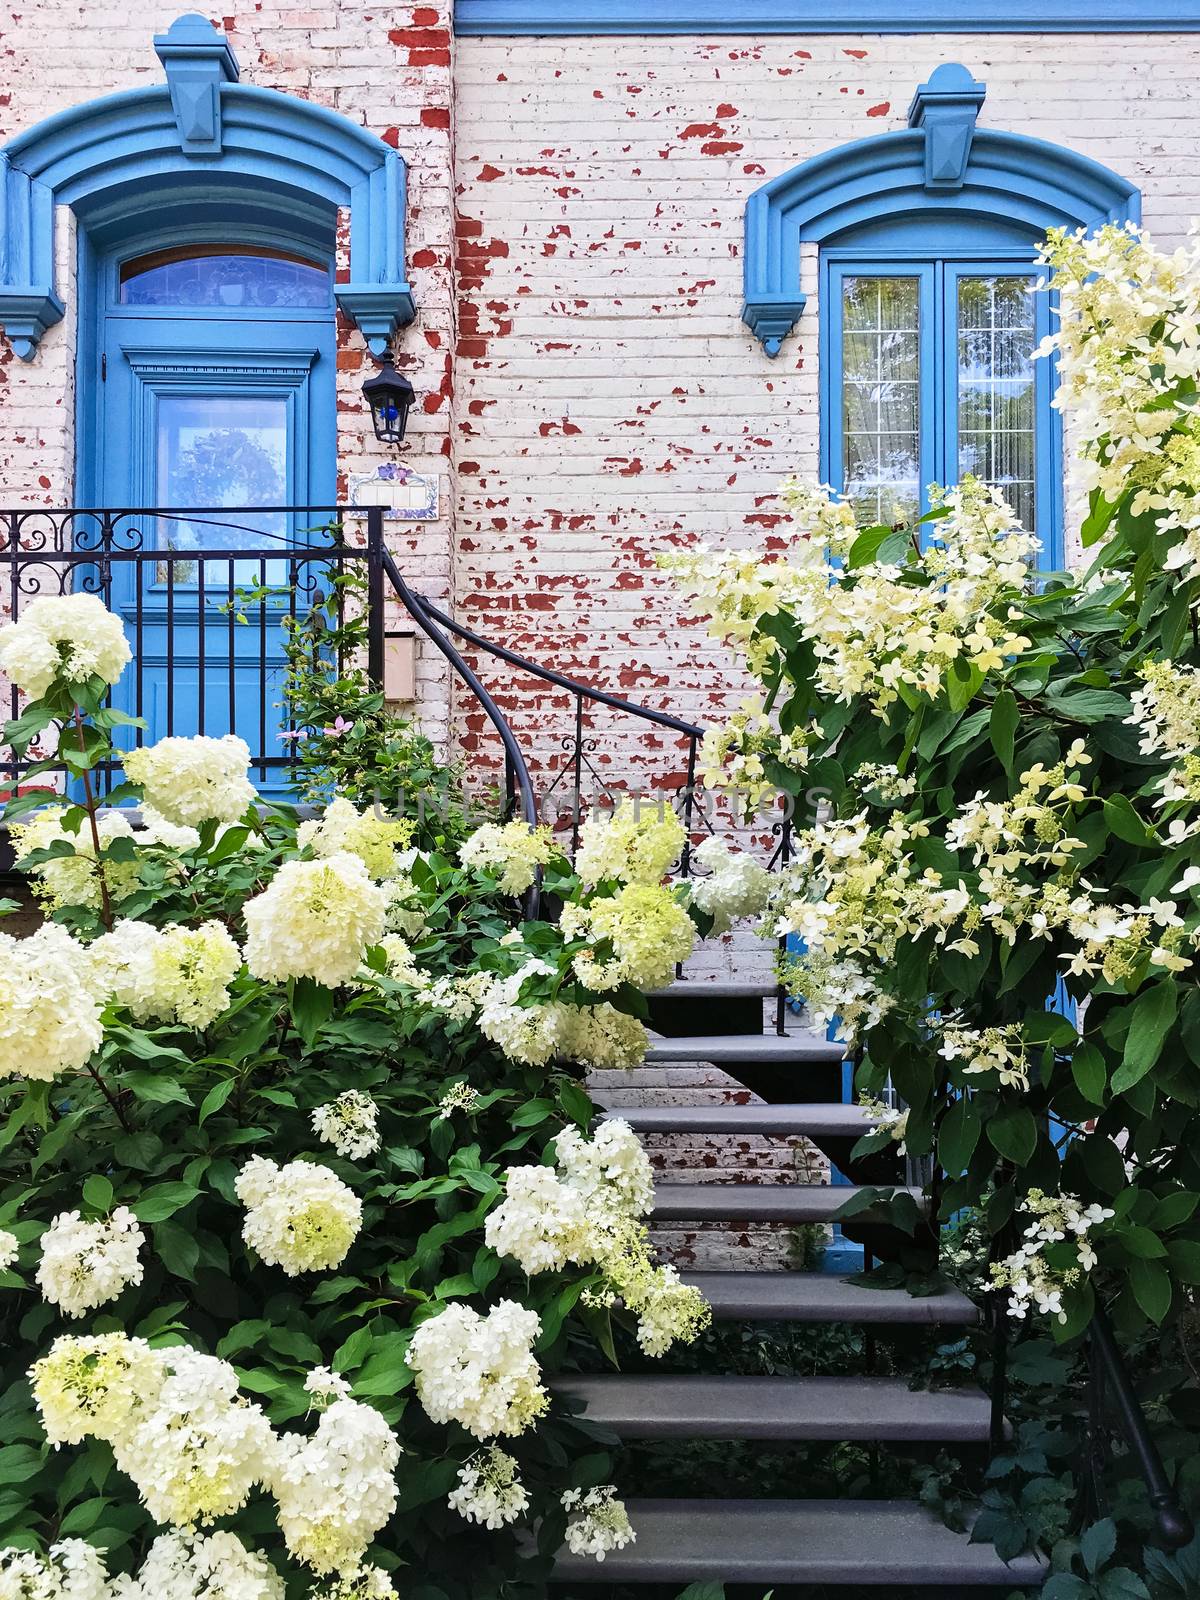 White gardenias decorating facade of a picturesque townhouse in Montreal. Quebec, Canada.